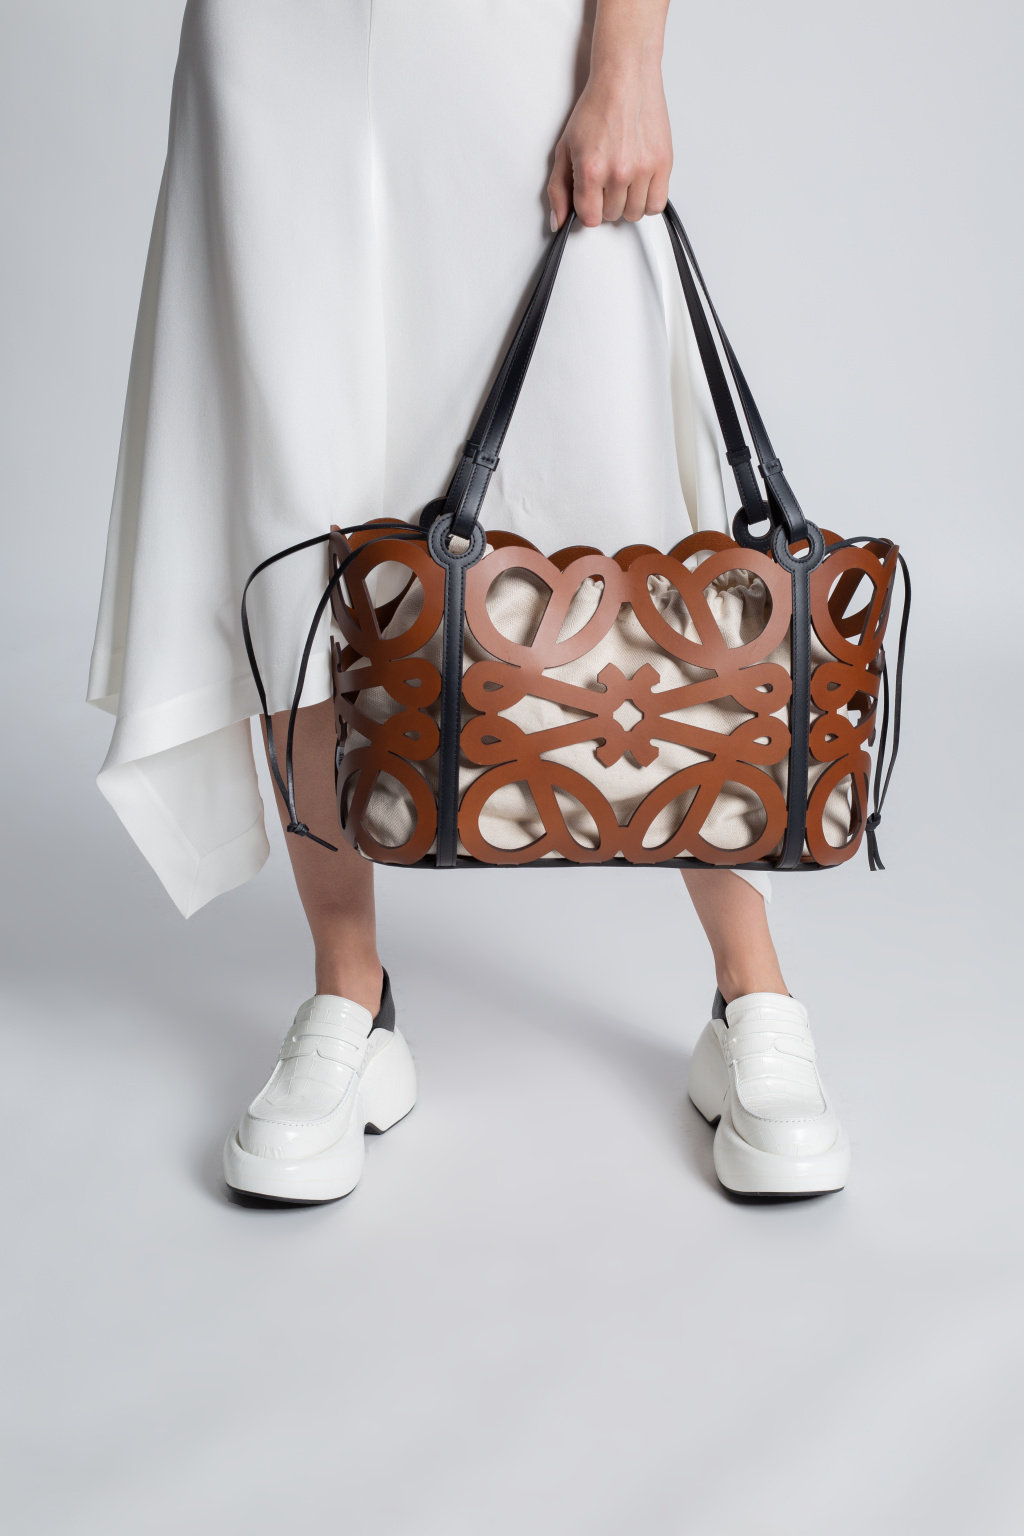 loewe loafers ‘Anagram’ shopper bag